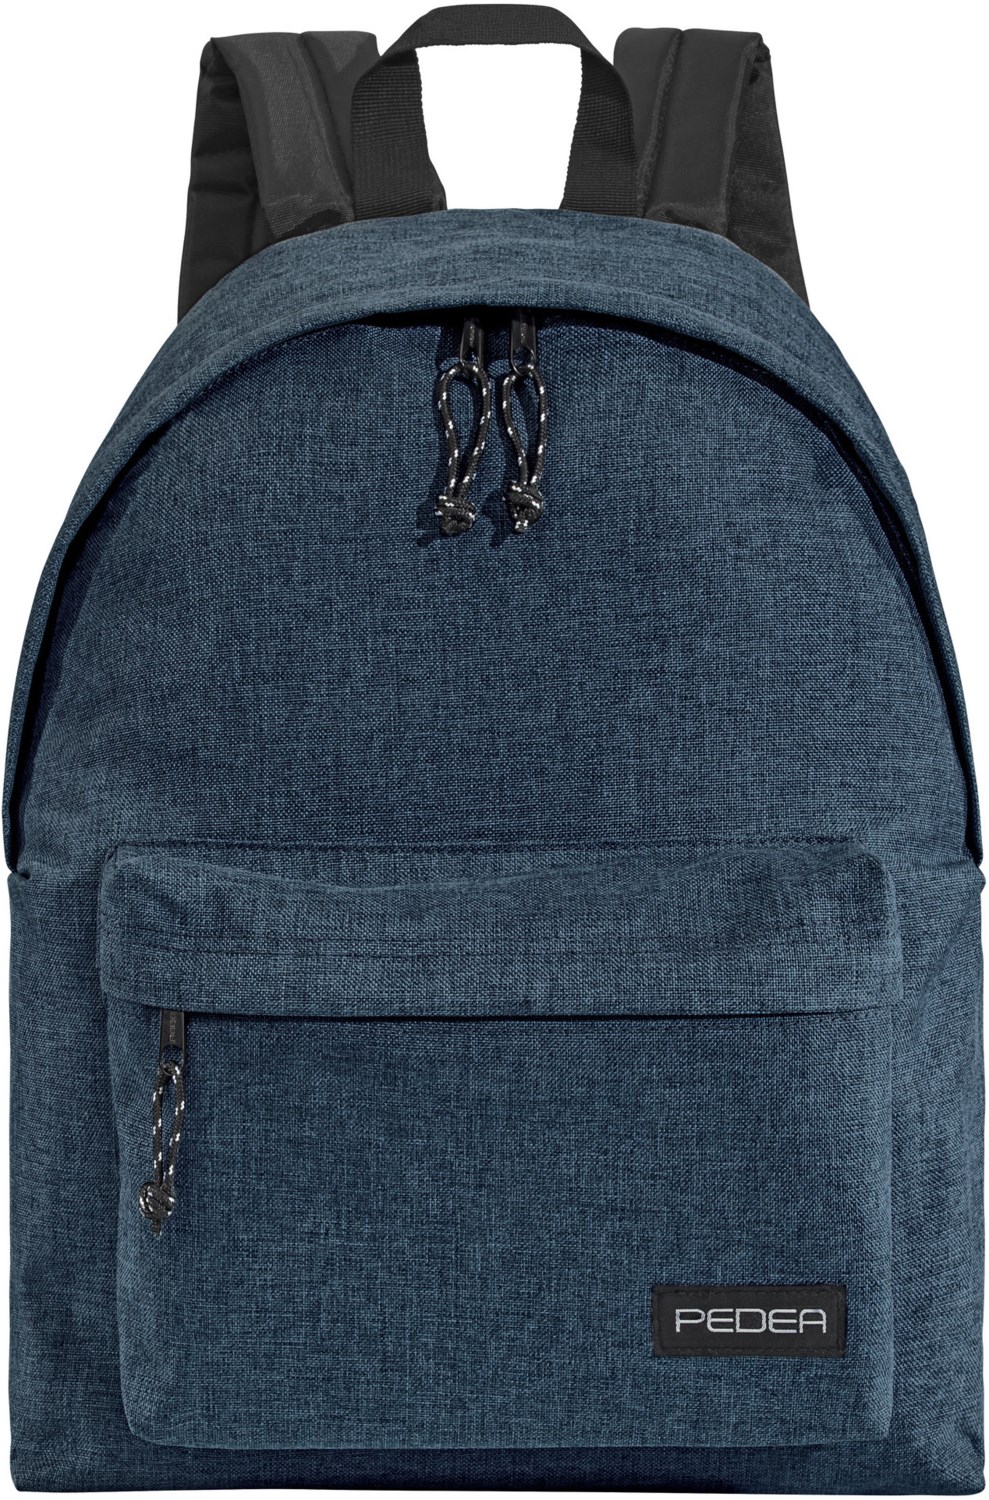 pedea rucksack style 13,3 blau